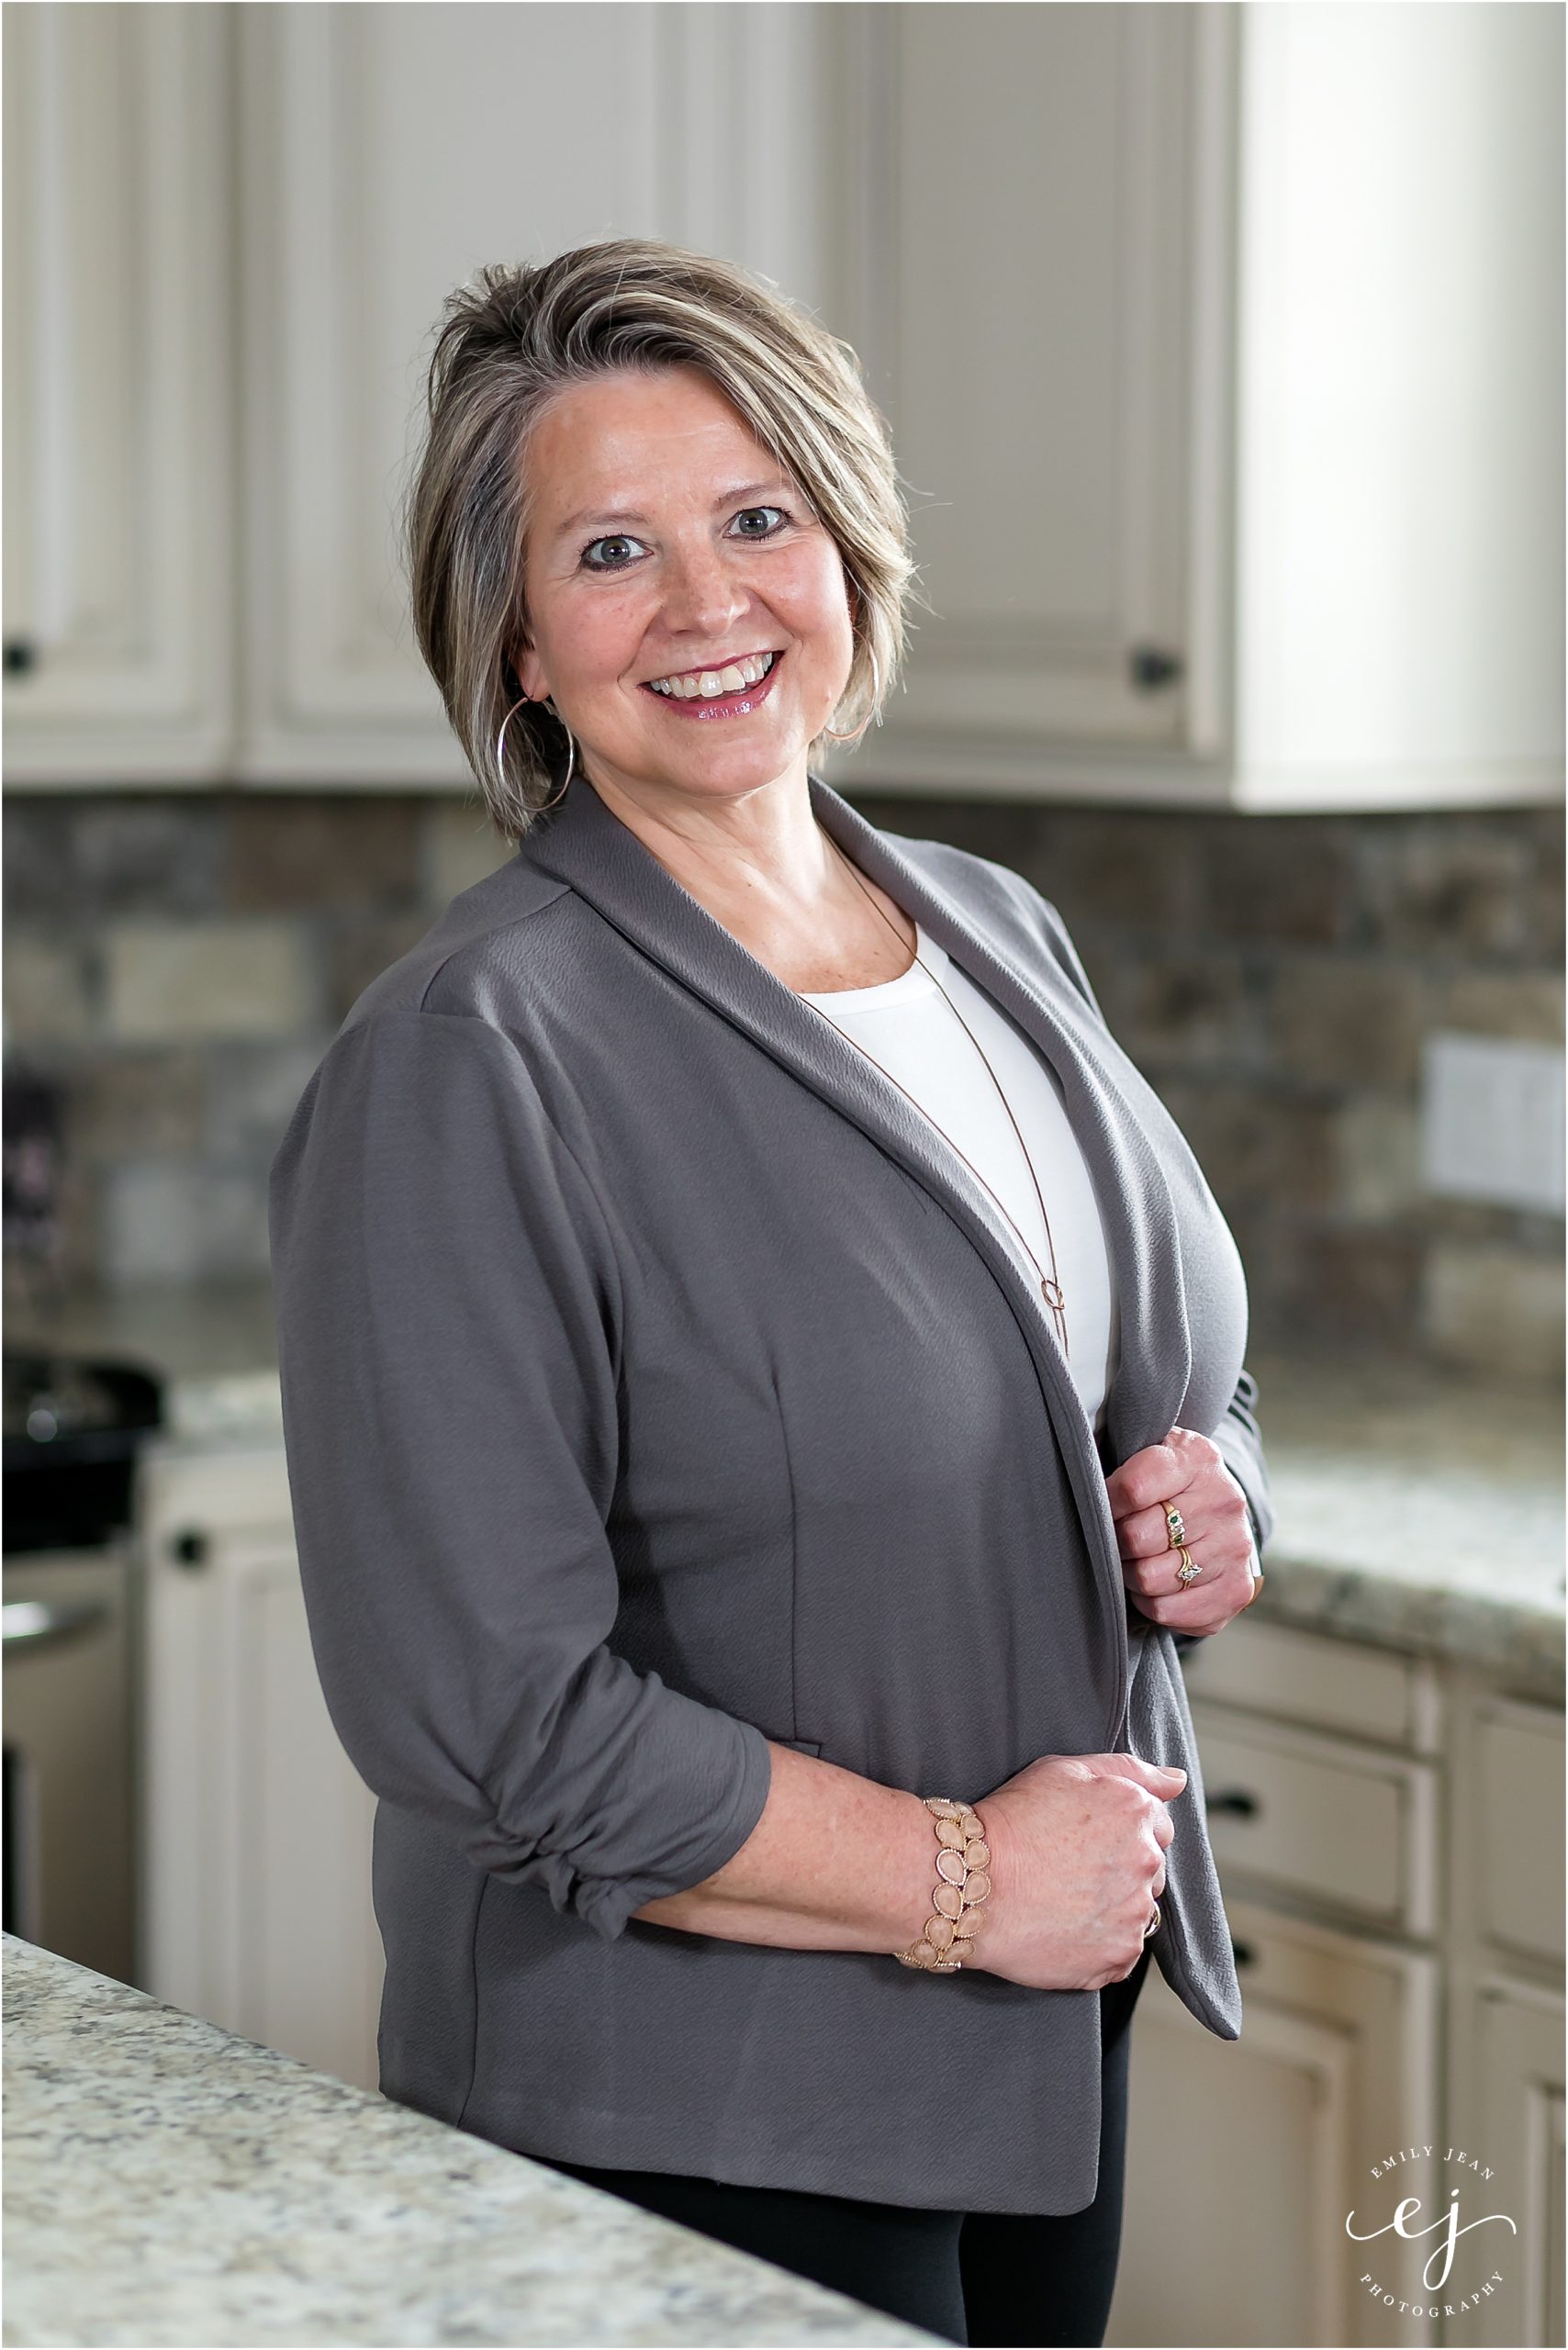 Real estate agent professional headshot one trust La Crosse Wisconsin woman standing in kitchen